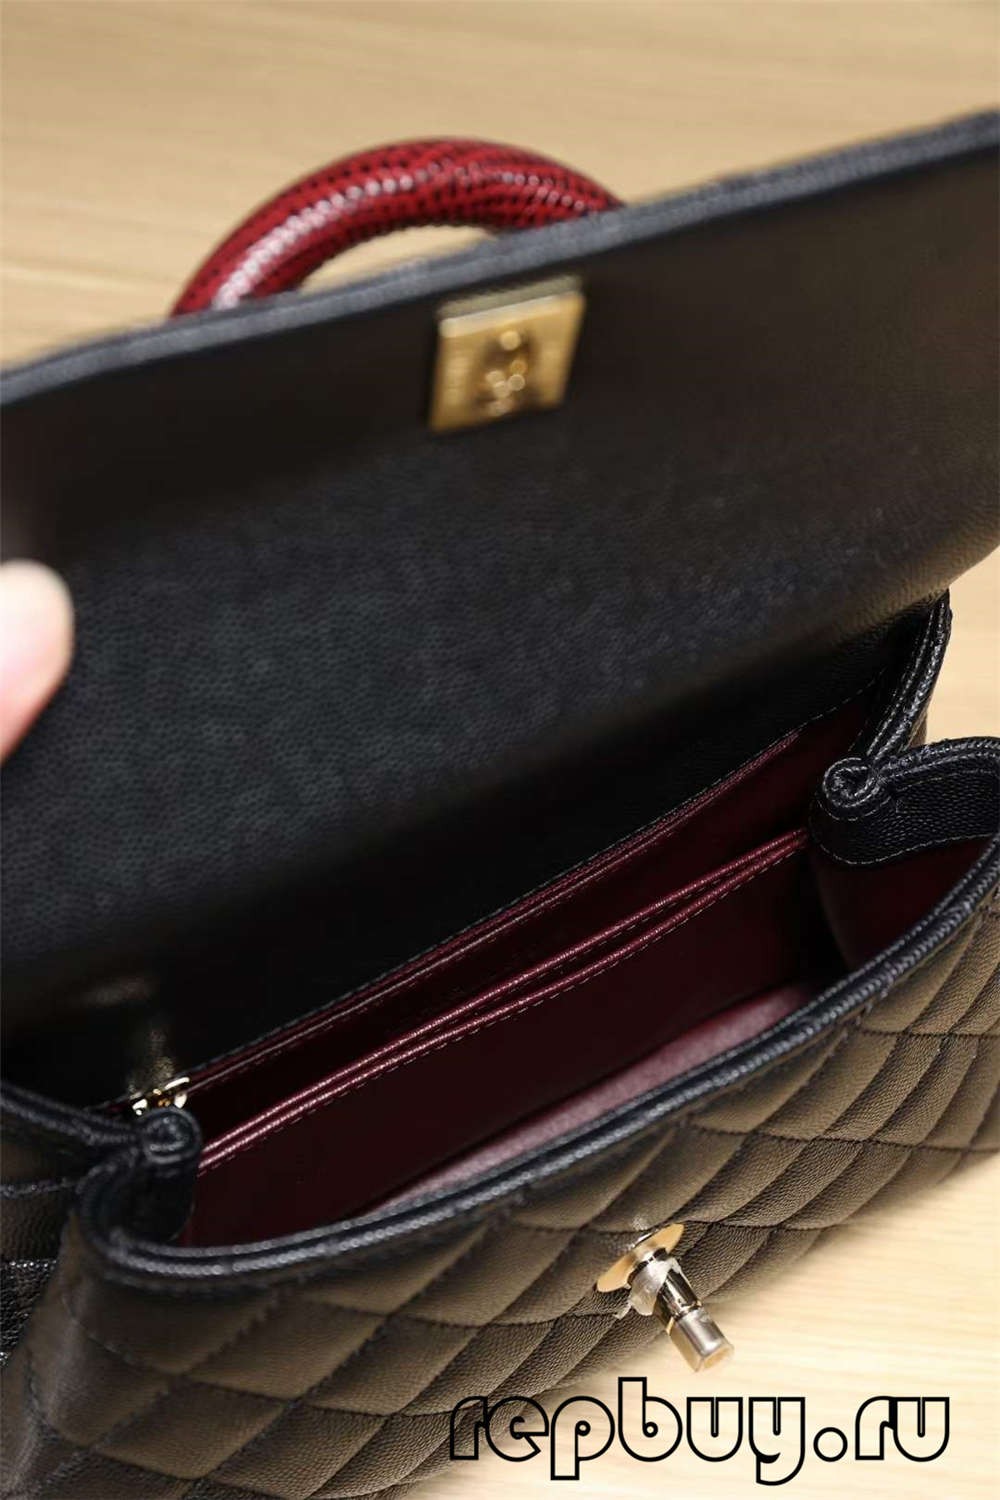 Chanel Coco Handle Top Replica Handbag Black Gold Buckle Inside Pocket Detail (2022 Updated)-Best Quality Fake designer Bag Review, Replica designer bag ru